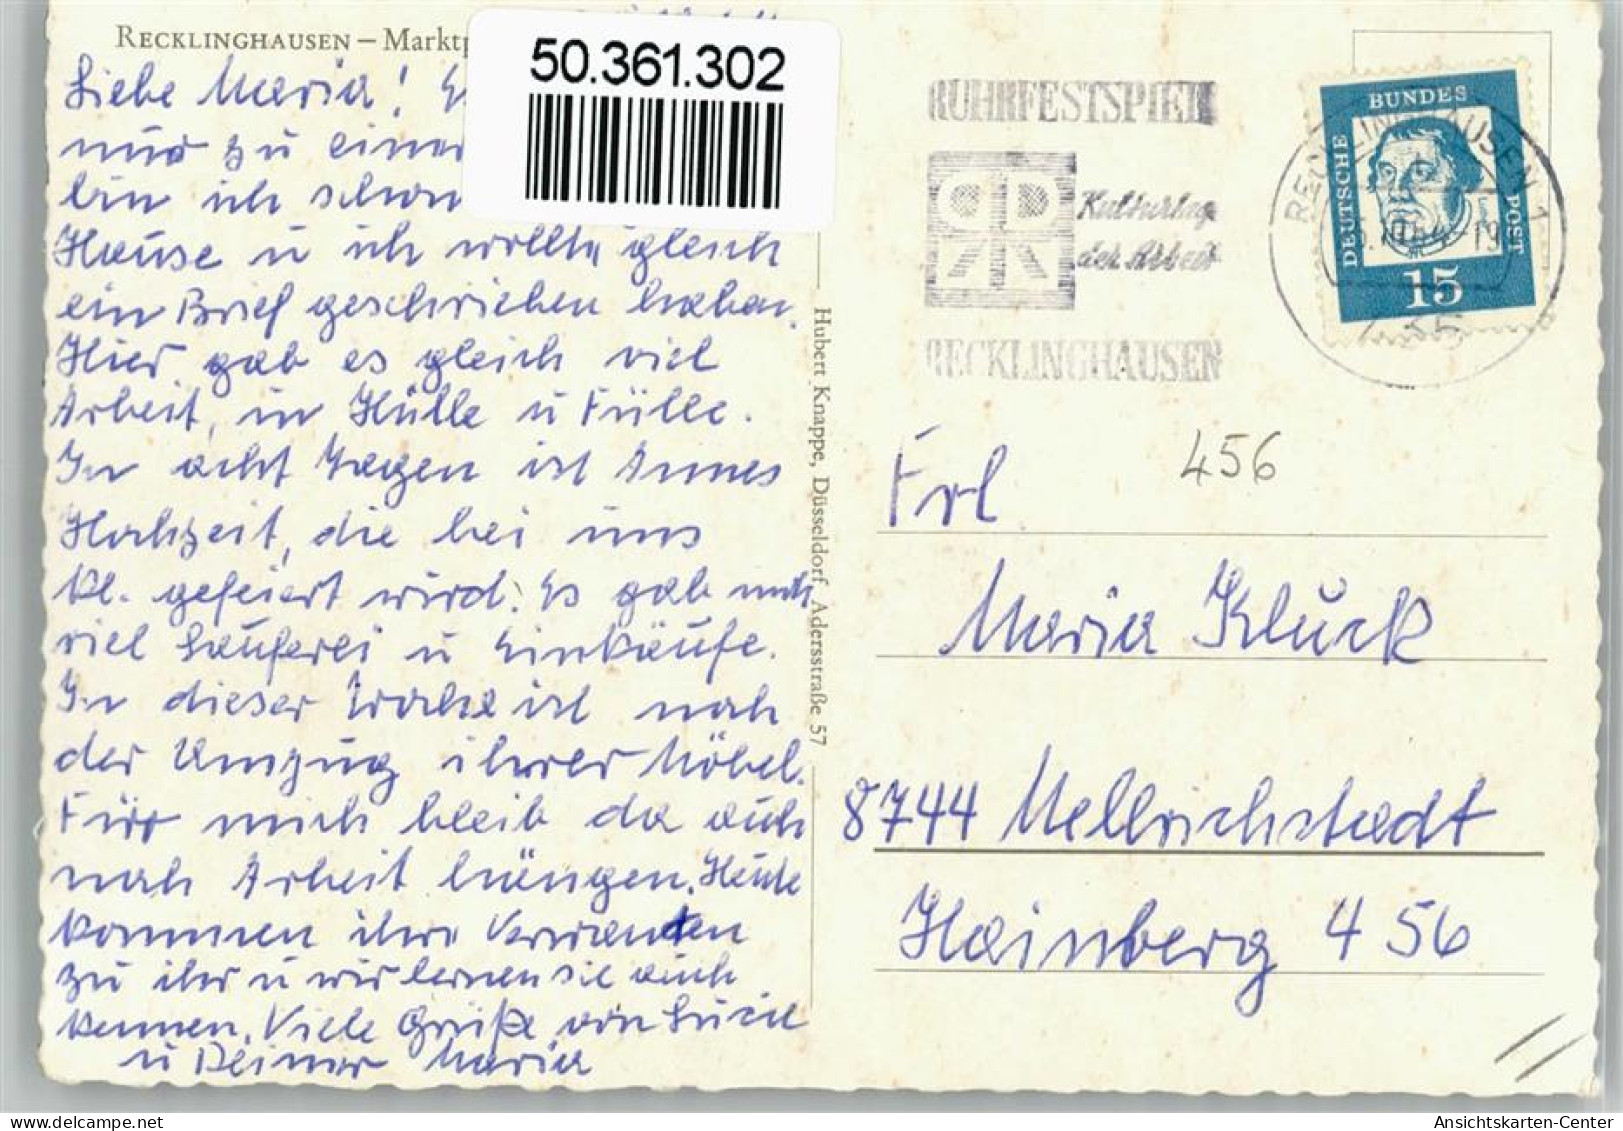 50361302 - Recklinghausen , Westf - Recklinghausen